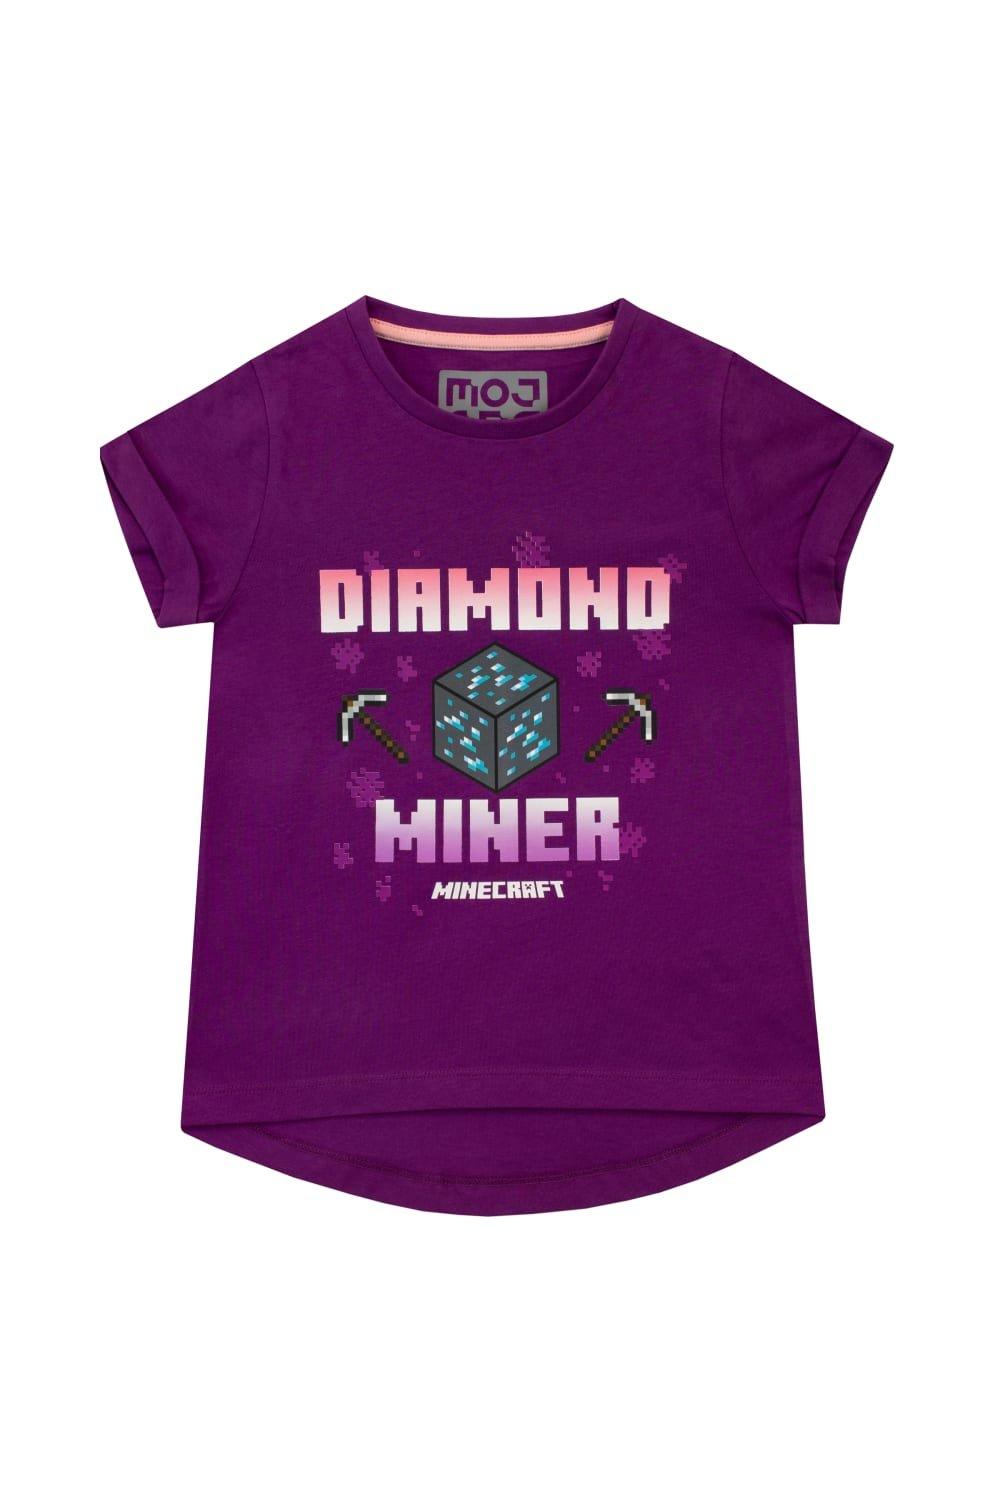 Dimond Miner Gaming T-Shirt